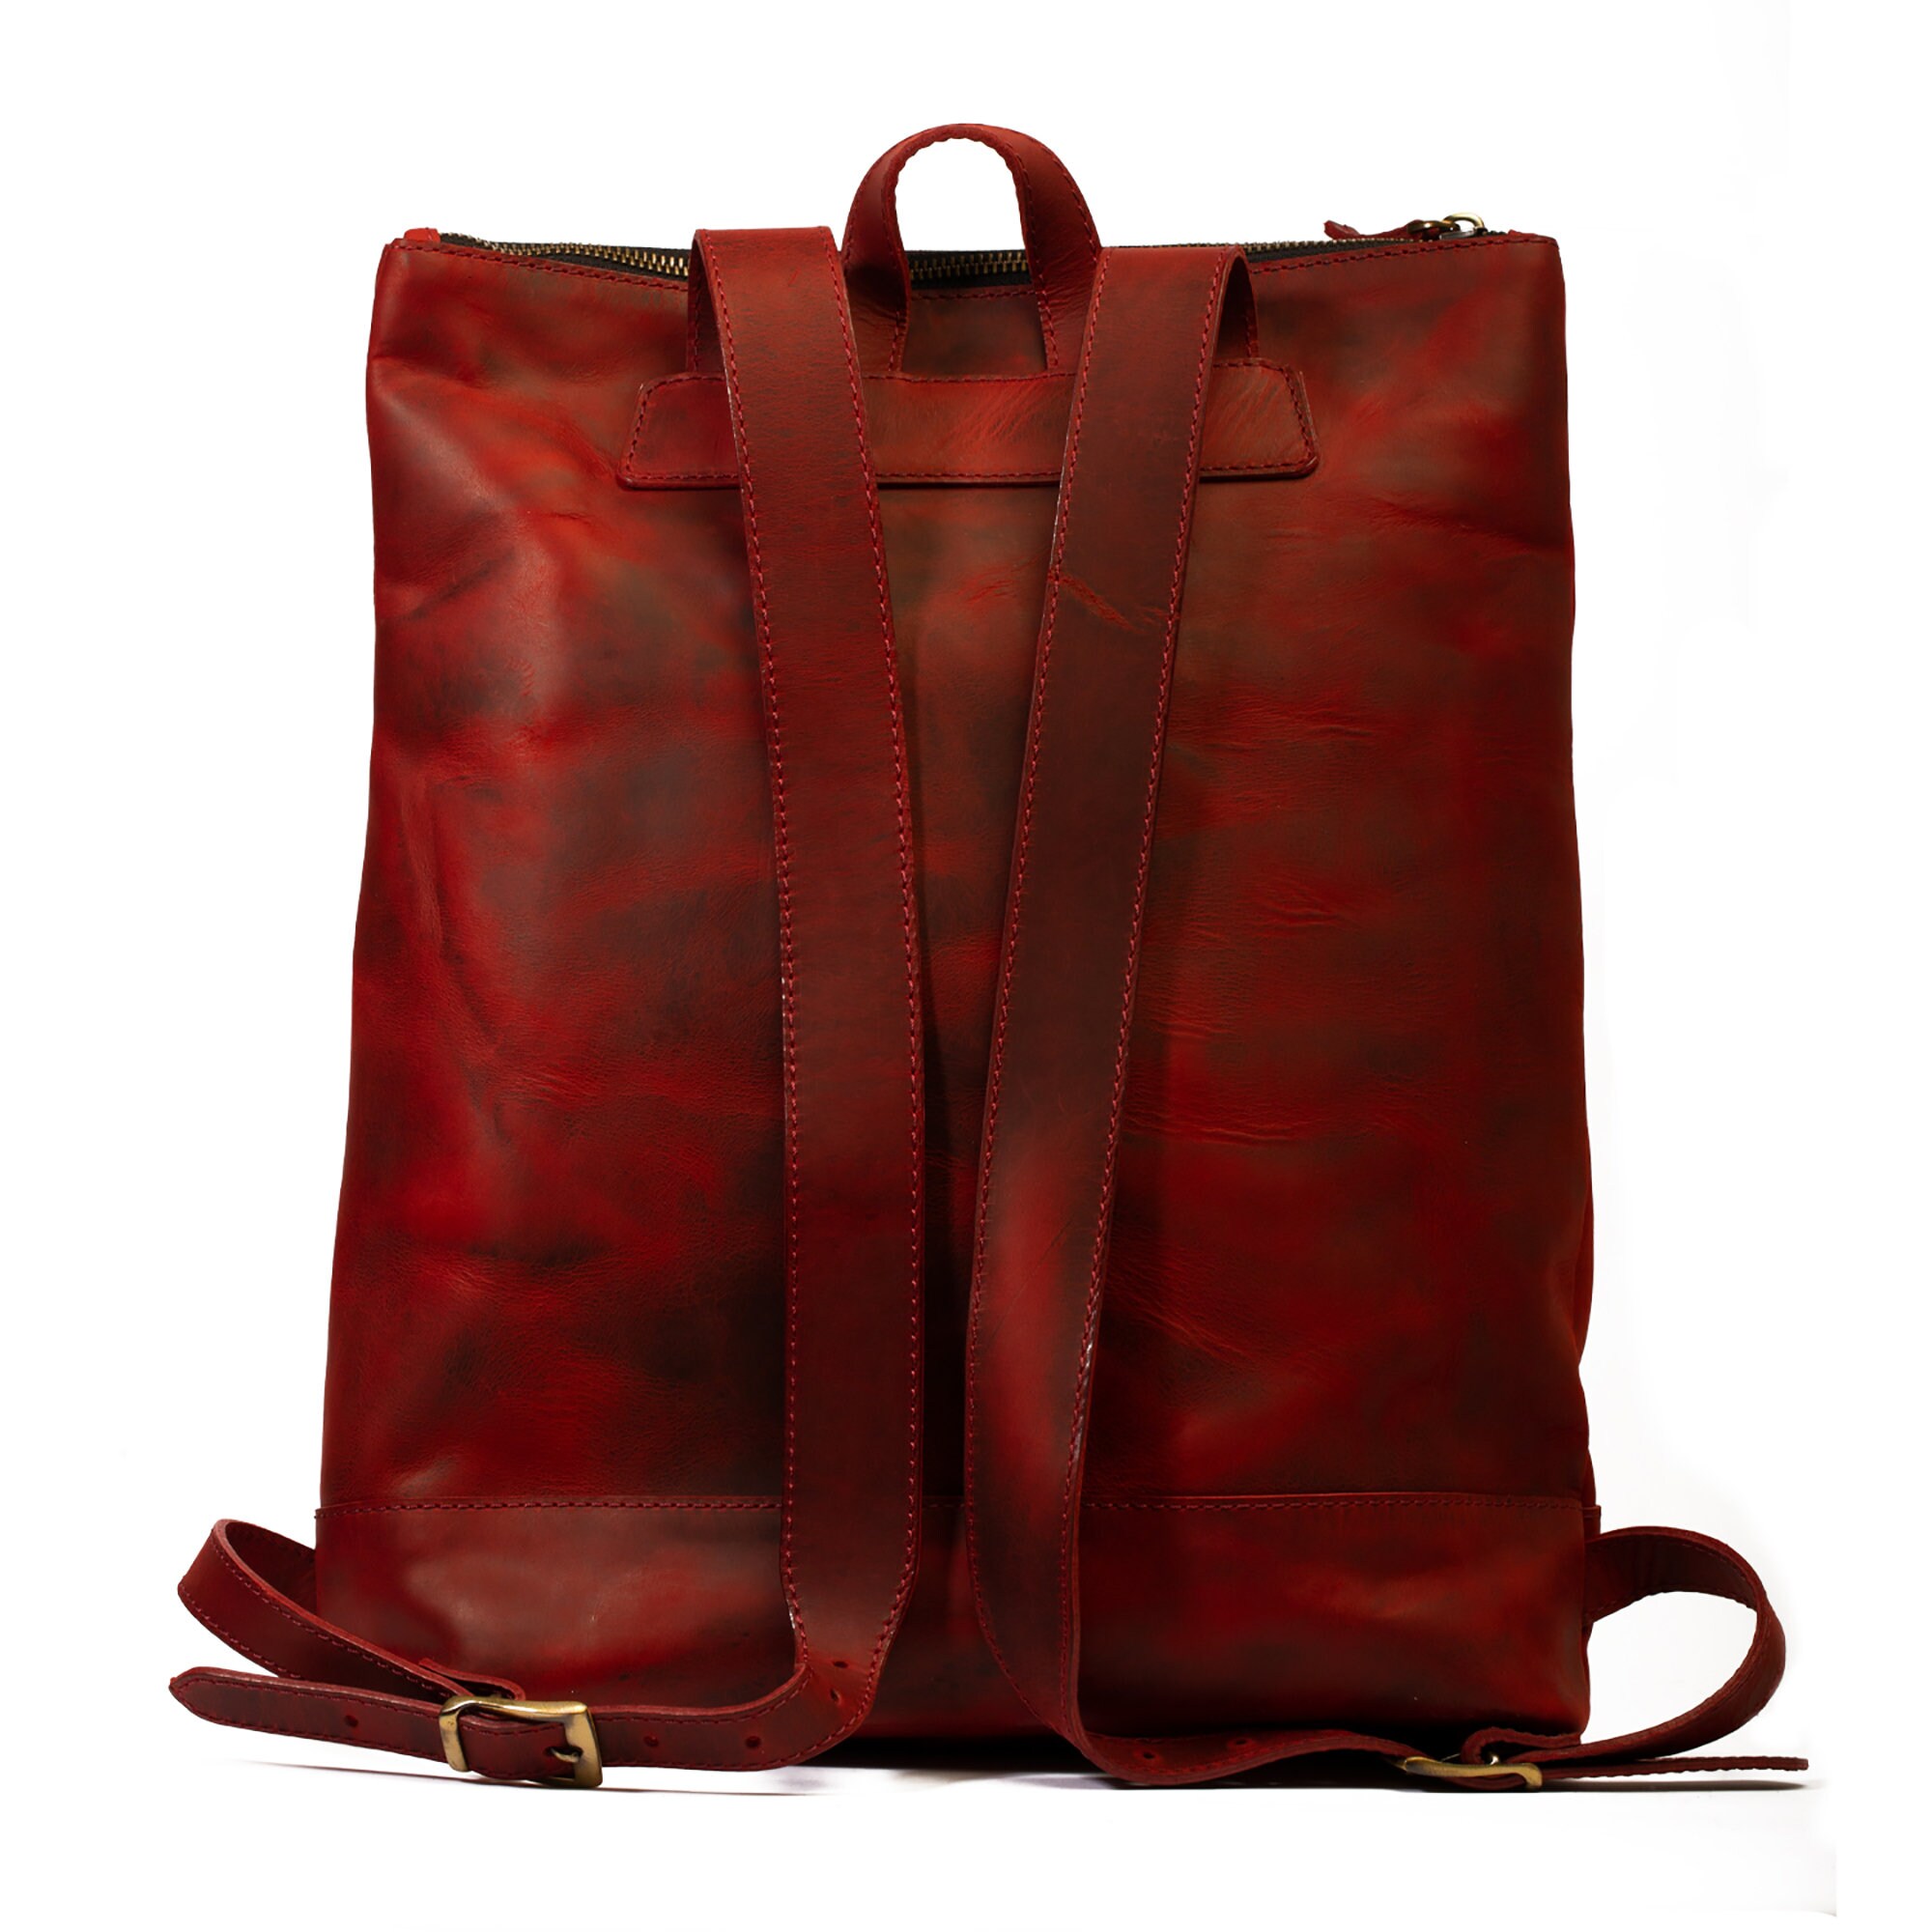 Leather backpack leather rucksack backpack laptop backpack | Etsy